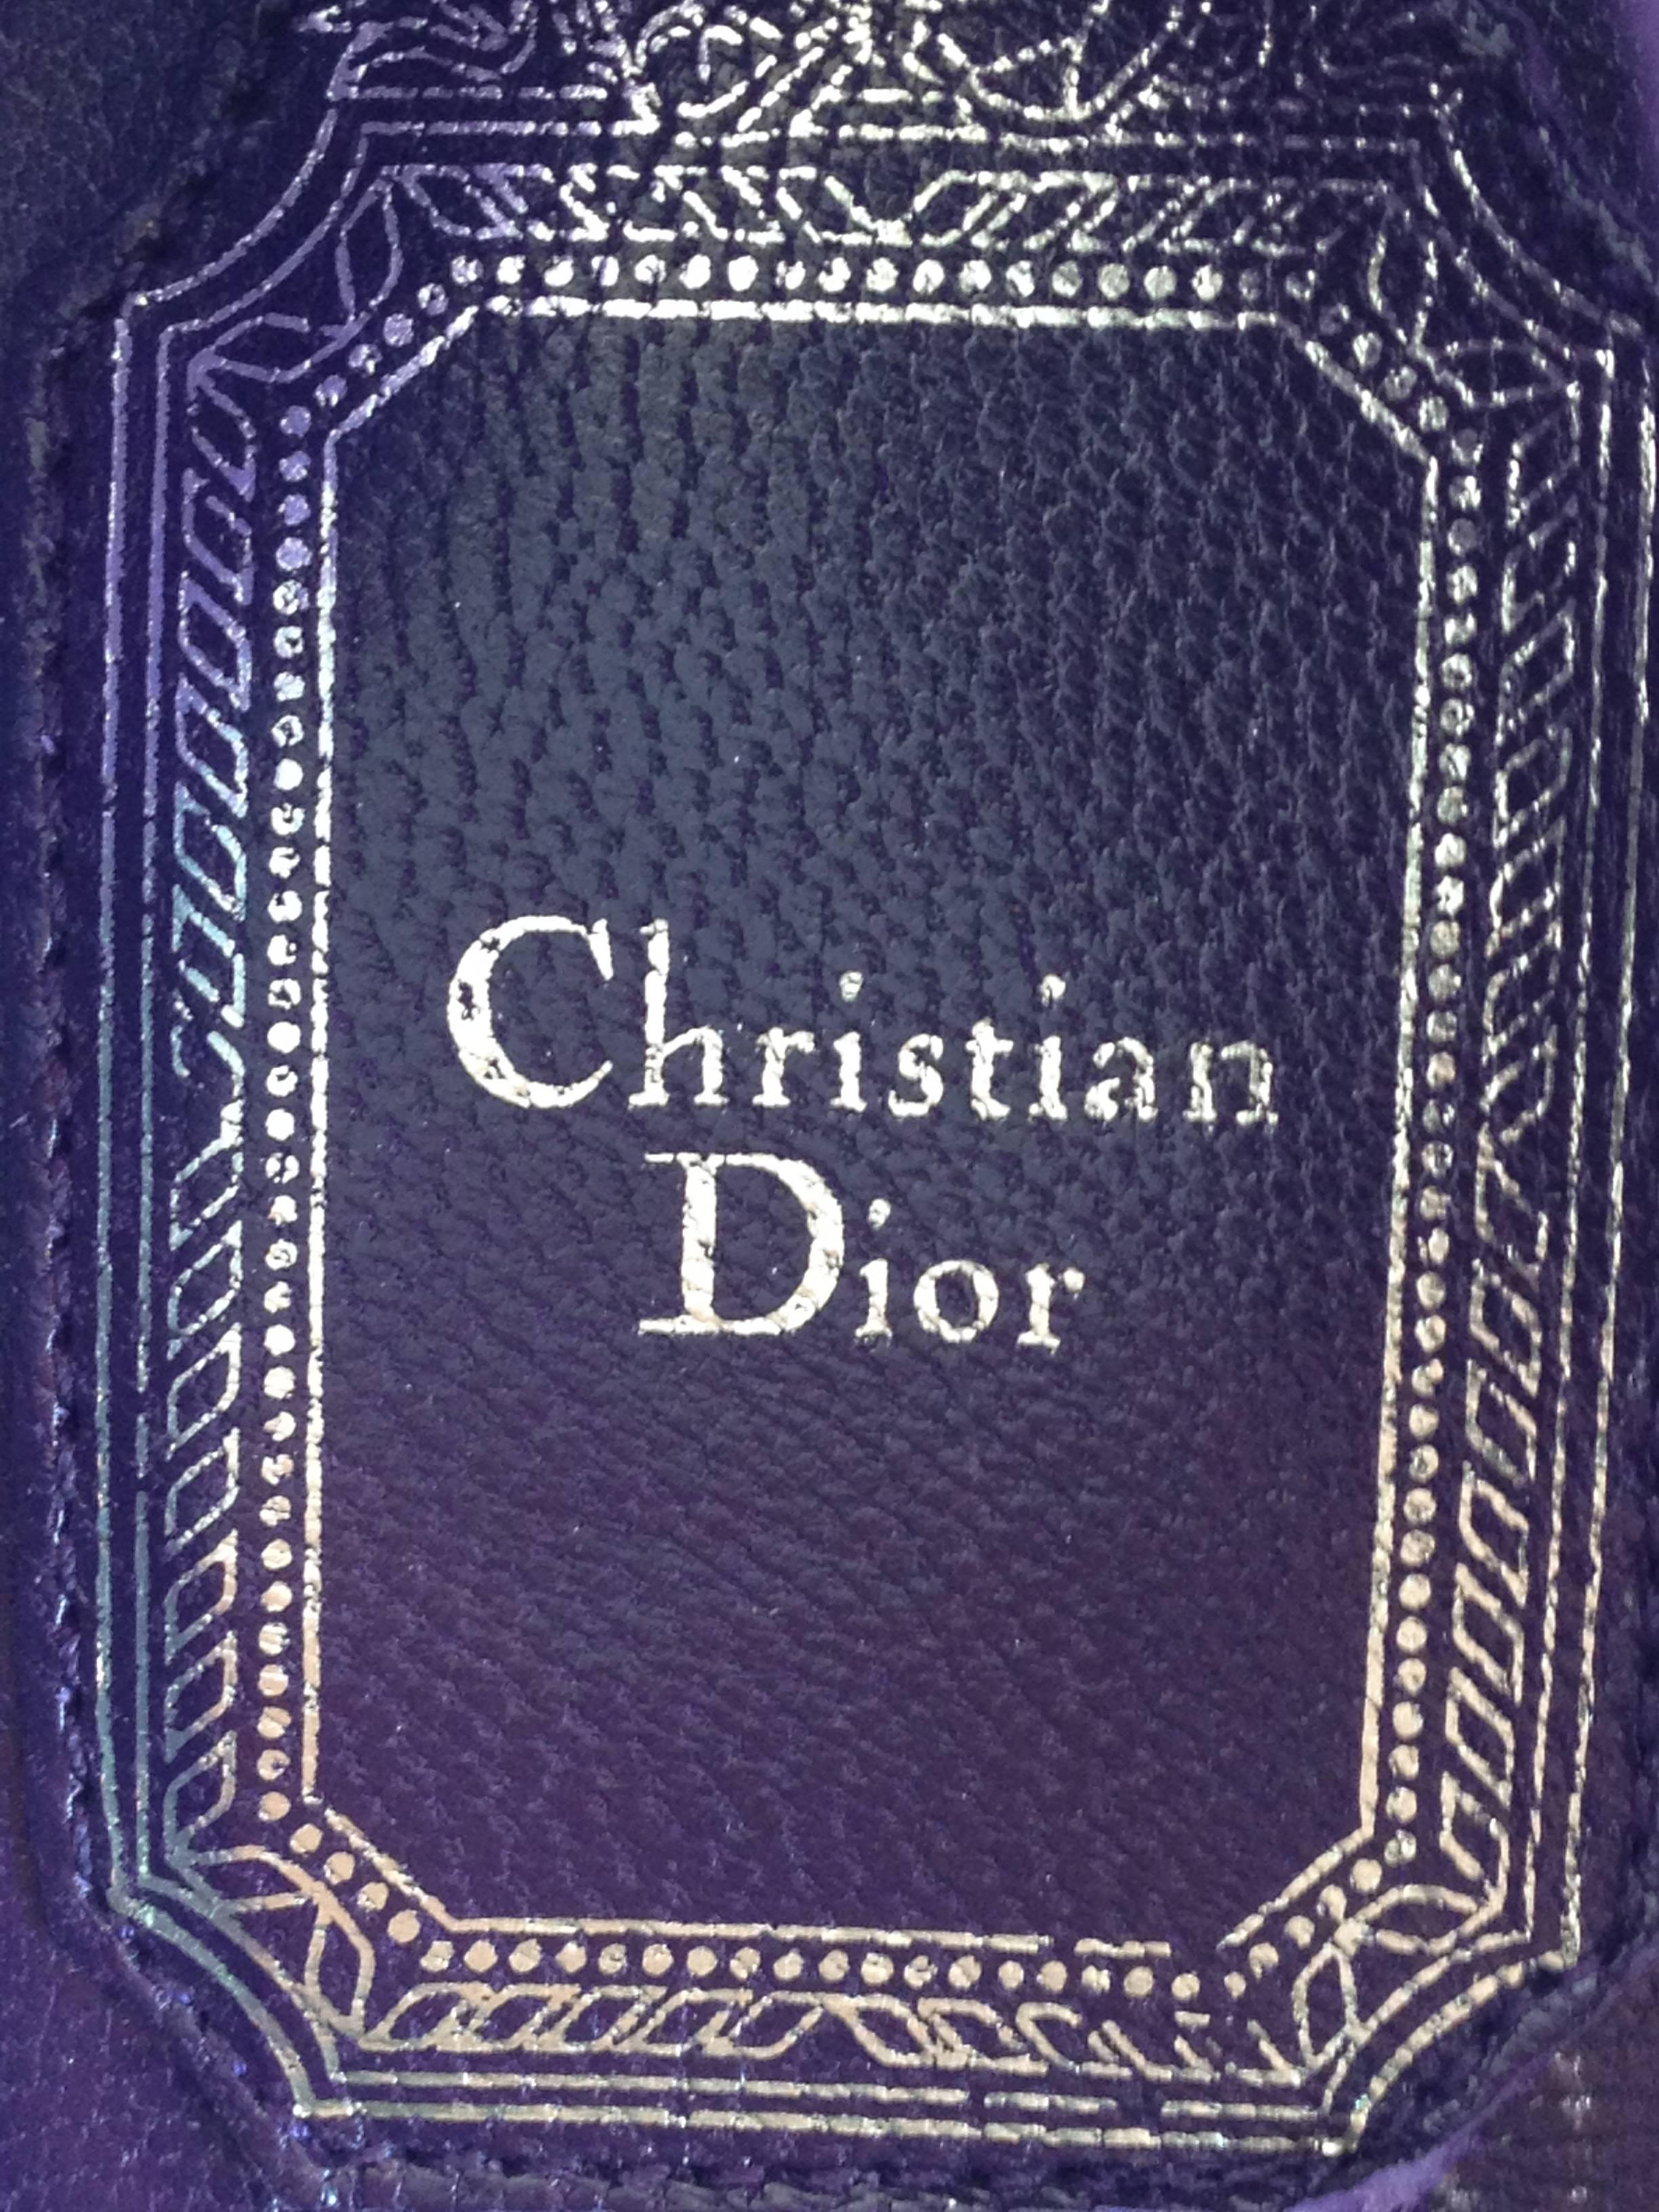 Christian Dior Purple Suede Block Heeled Pumps Size 37 (6.5) 3